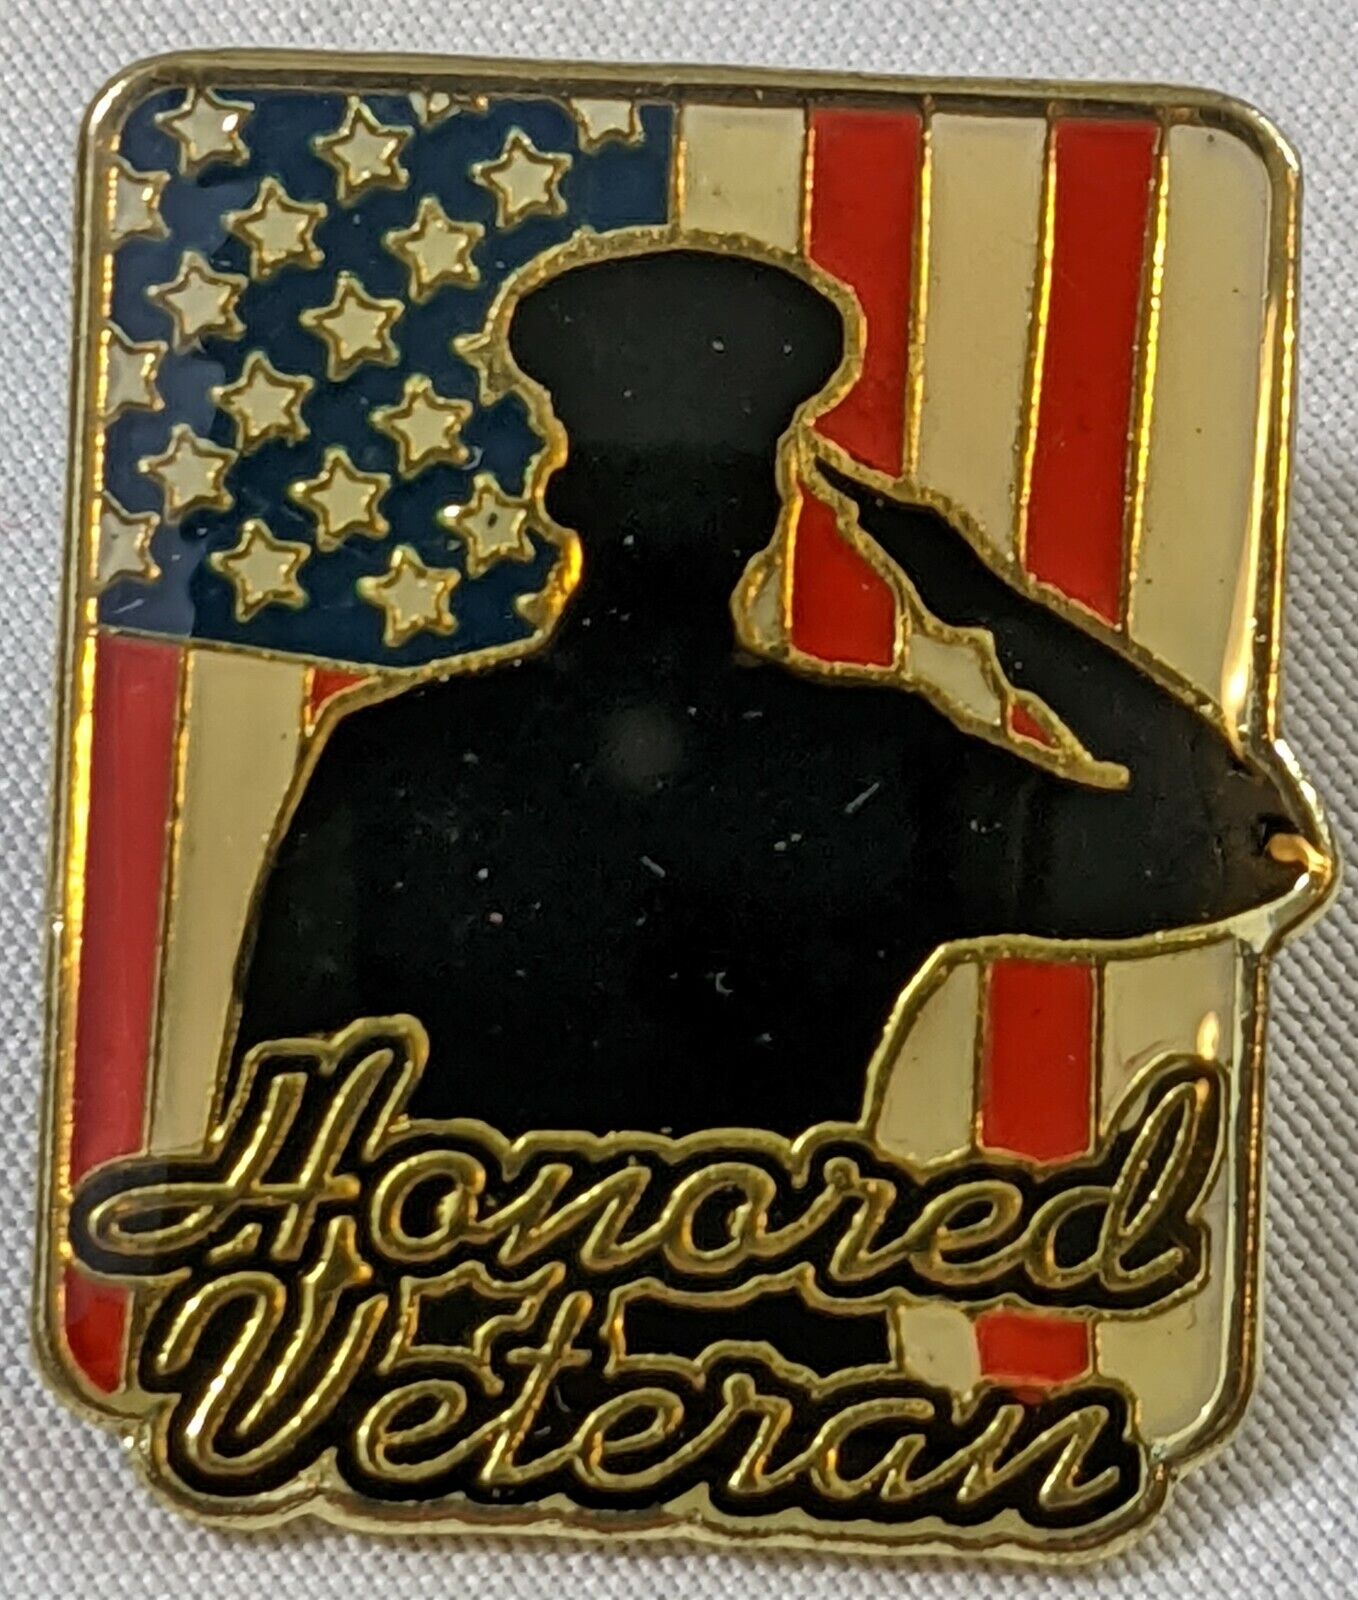 Honored Veteran USA Patriotic American Lapel Pin Badge Collectible by Hogeye